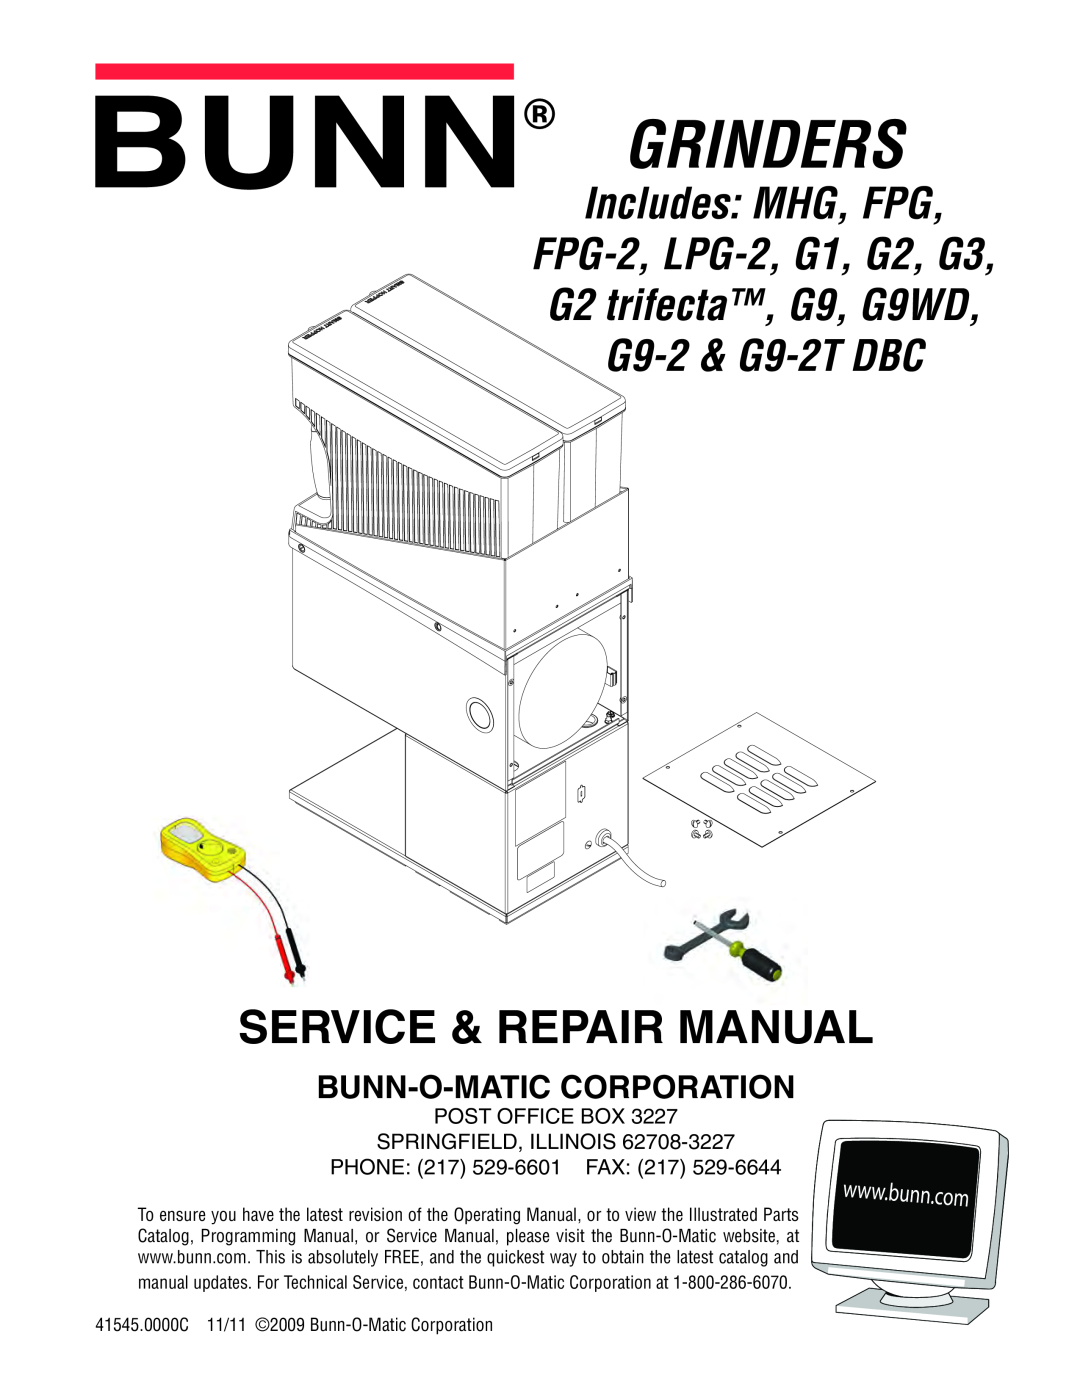 Bunn G2 TRIFECTA service manual G1,G2,G3, G2 trifecta, Installation & Operating Guide, Bunn-O-Maticcorporation 